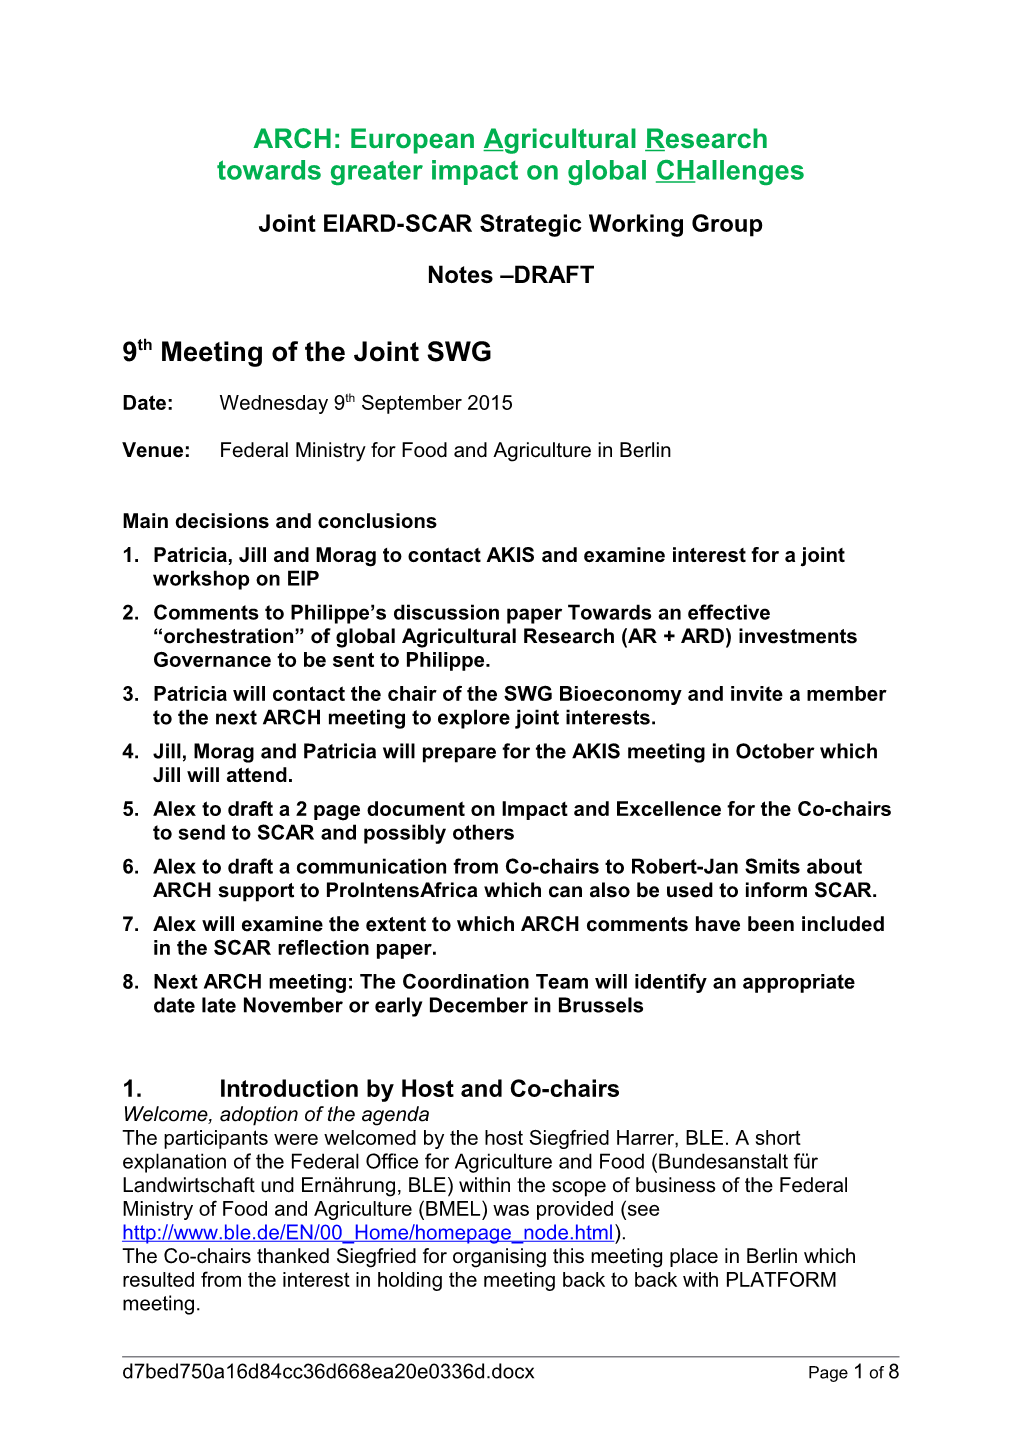 Joint EIARD-SCAR Strategic Working Group